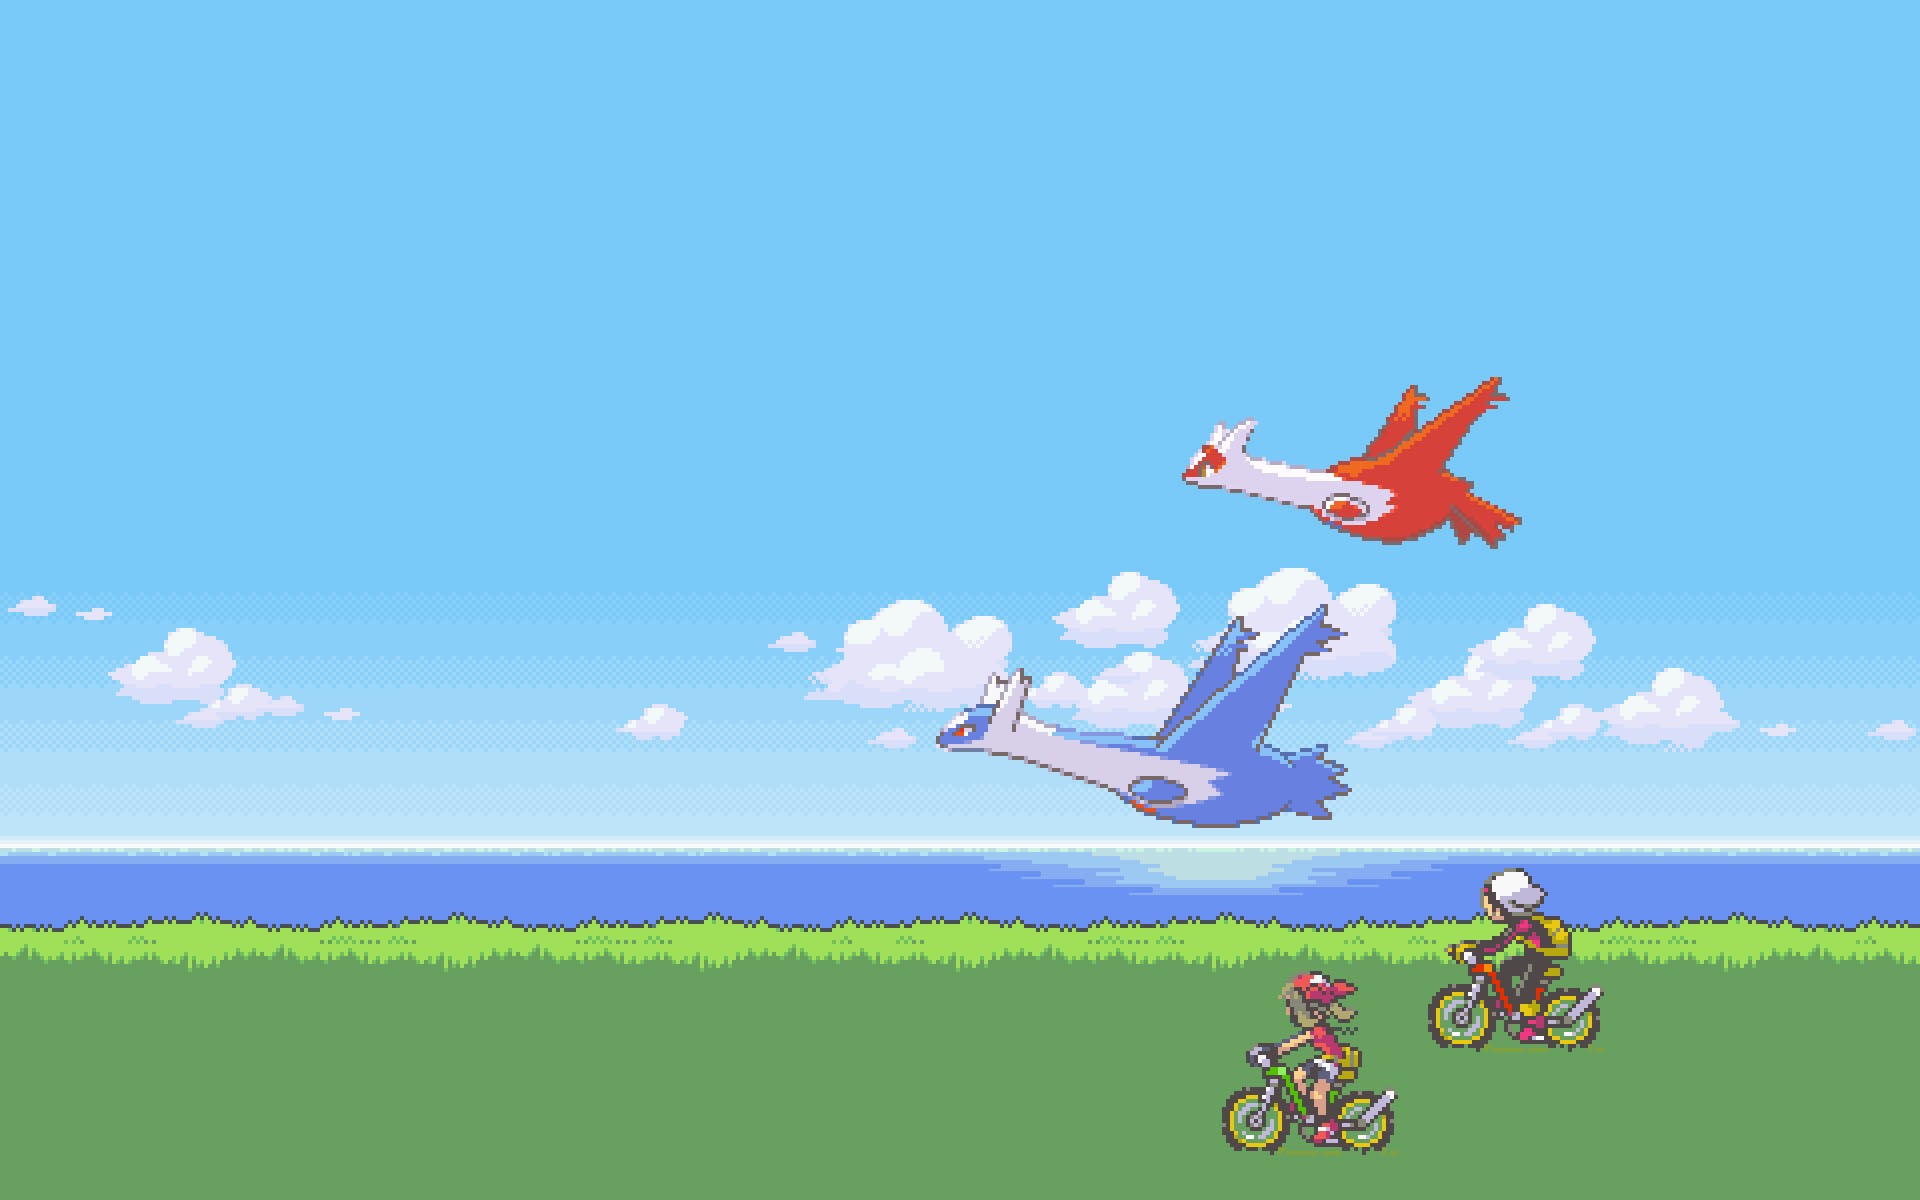 Anime 1920x1200 pixels video games Pokémon Latias Latios May (pokemon) sky clouds bicycle grass hat pixel art